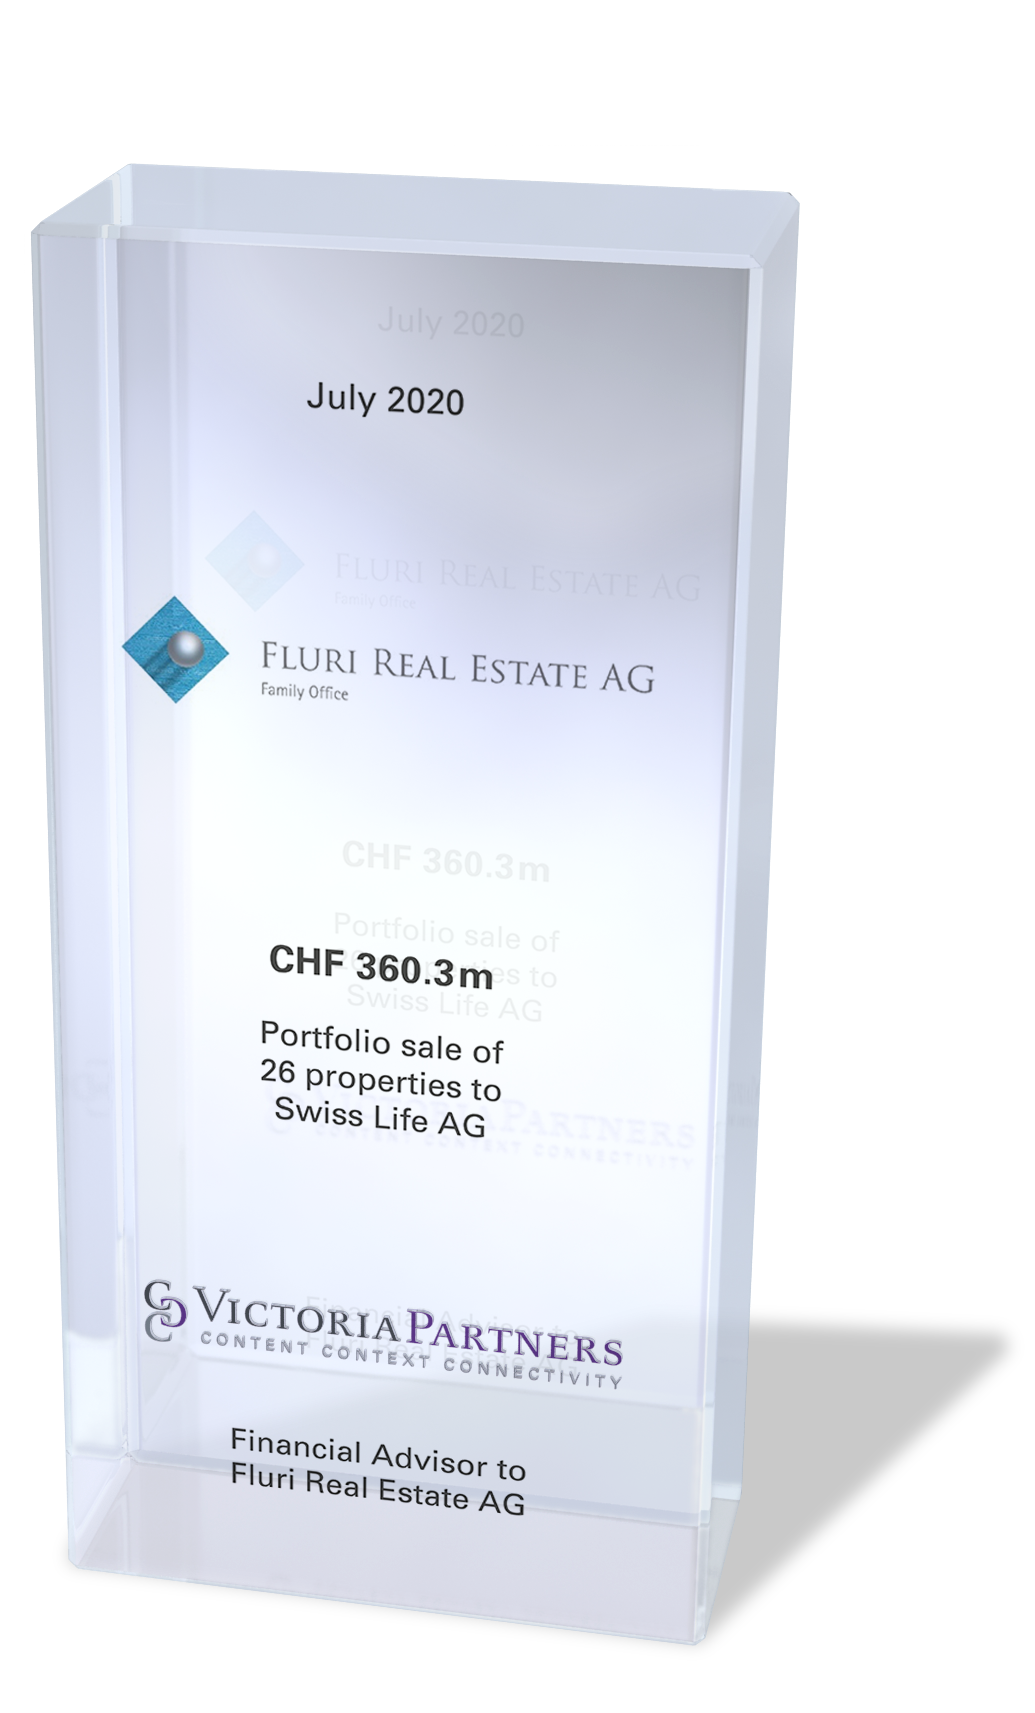 VICTORIAPARTNERS - Financial Advisor to Fluri Real Estate AG - July 2020